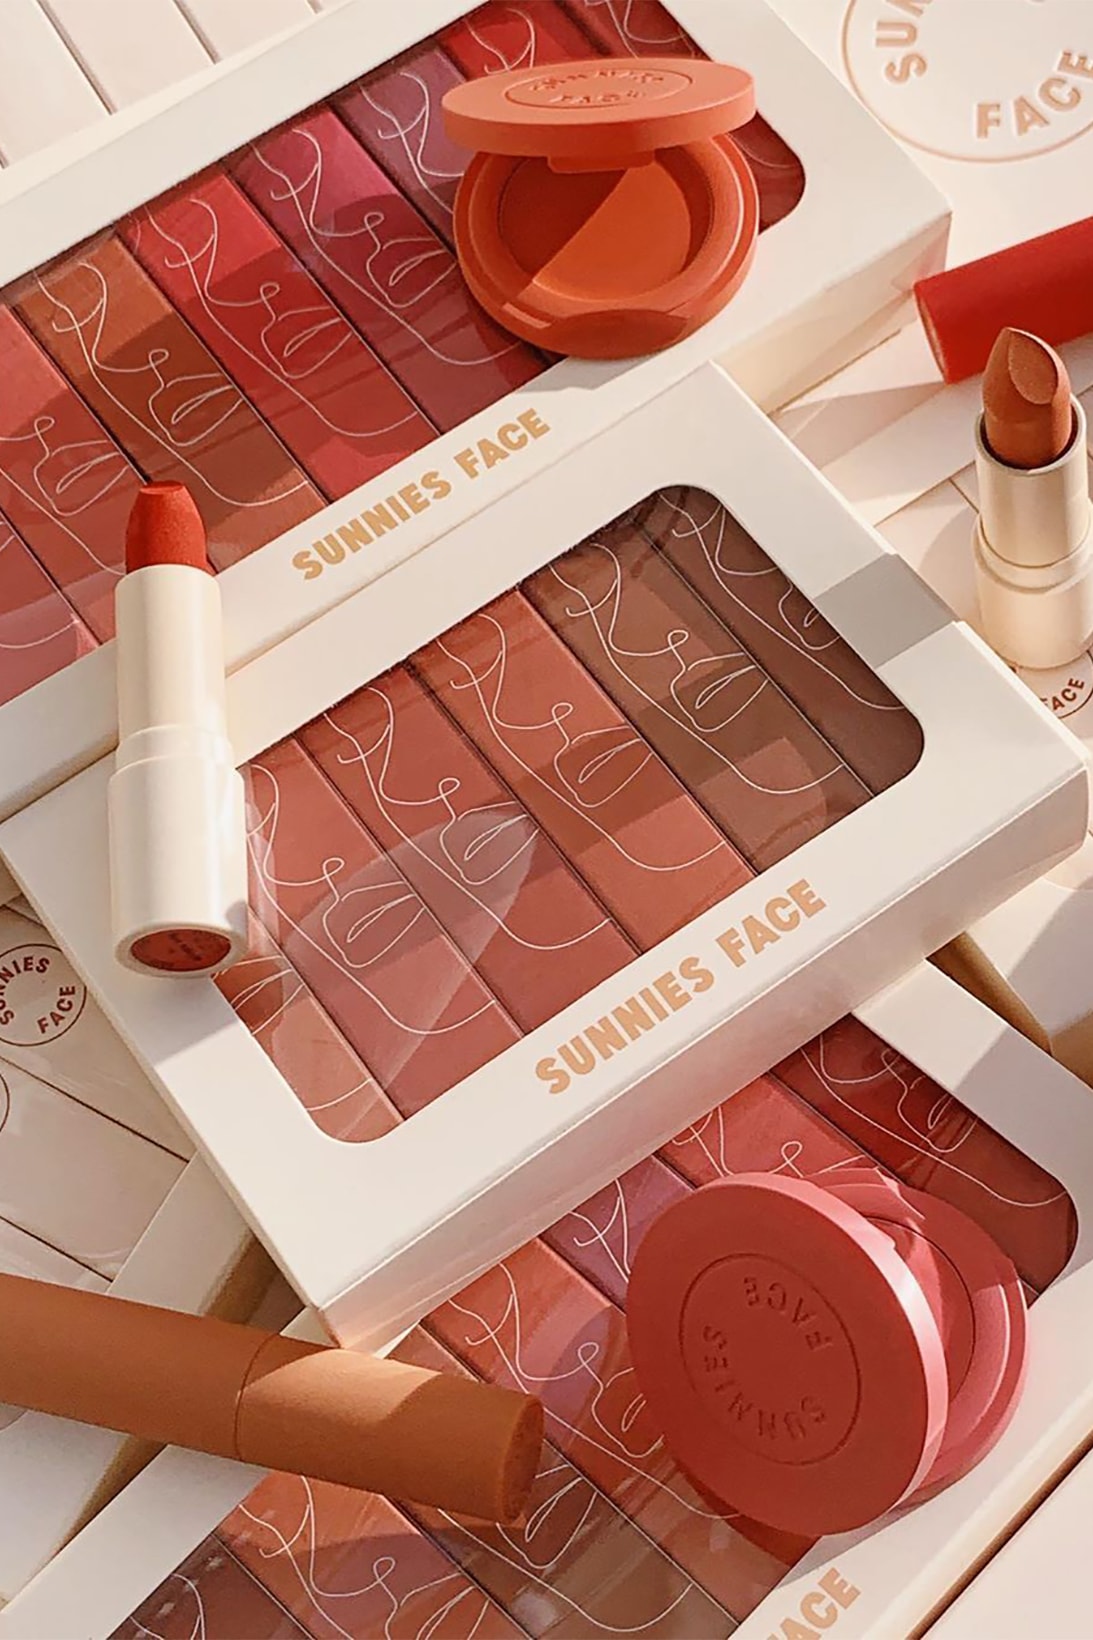 sunnies face anniversary sale lipsticks blushes makeup fluffmatte airblush